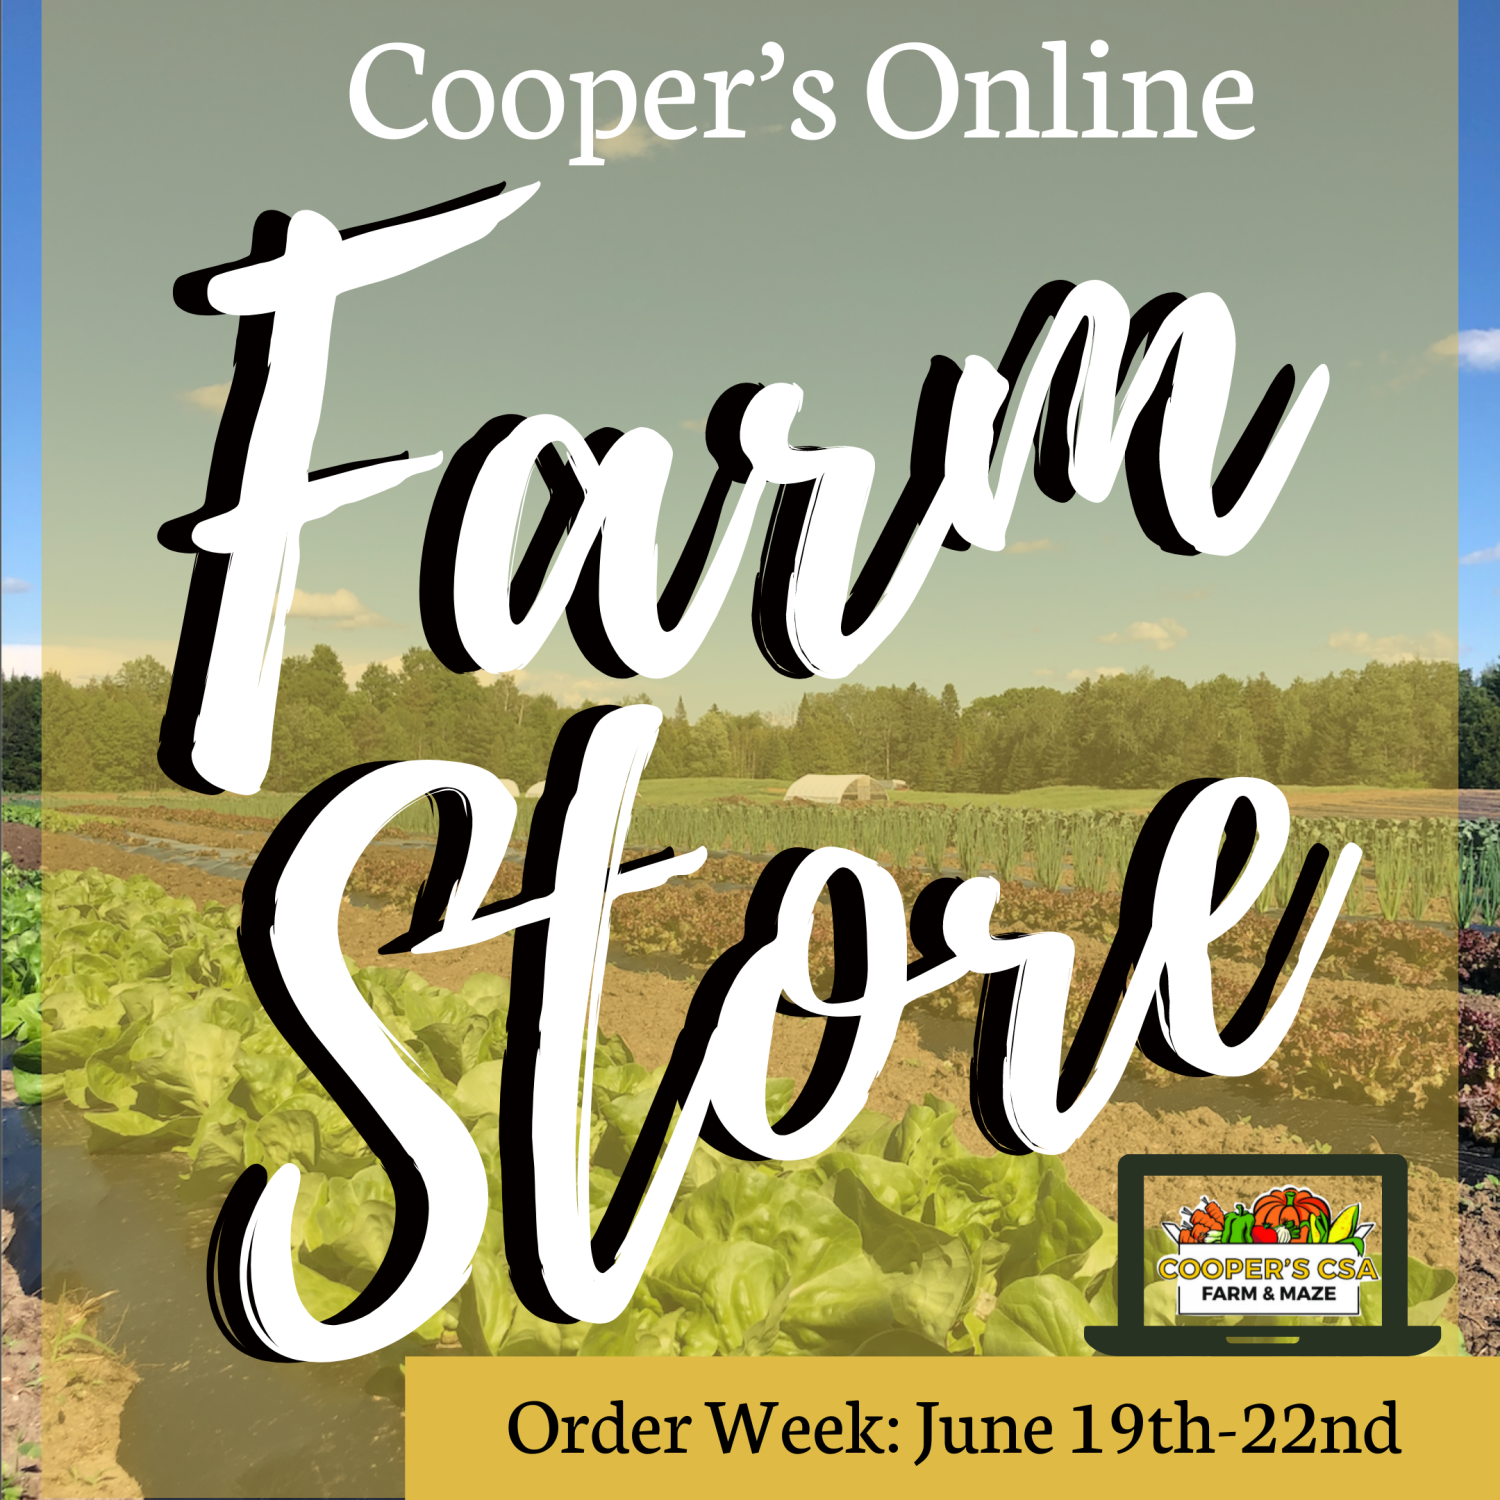 Next Happening: Coopers CSA Online FarmStore- Order week June 19th-22nd